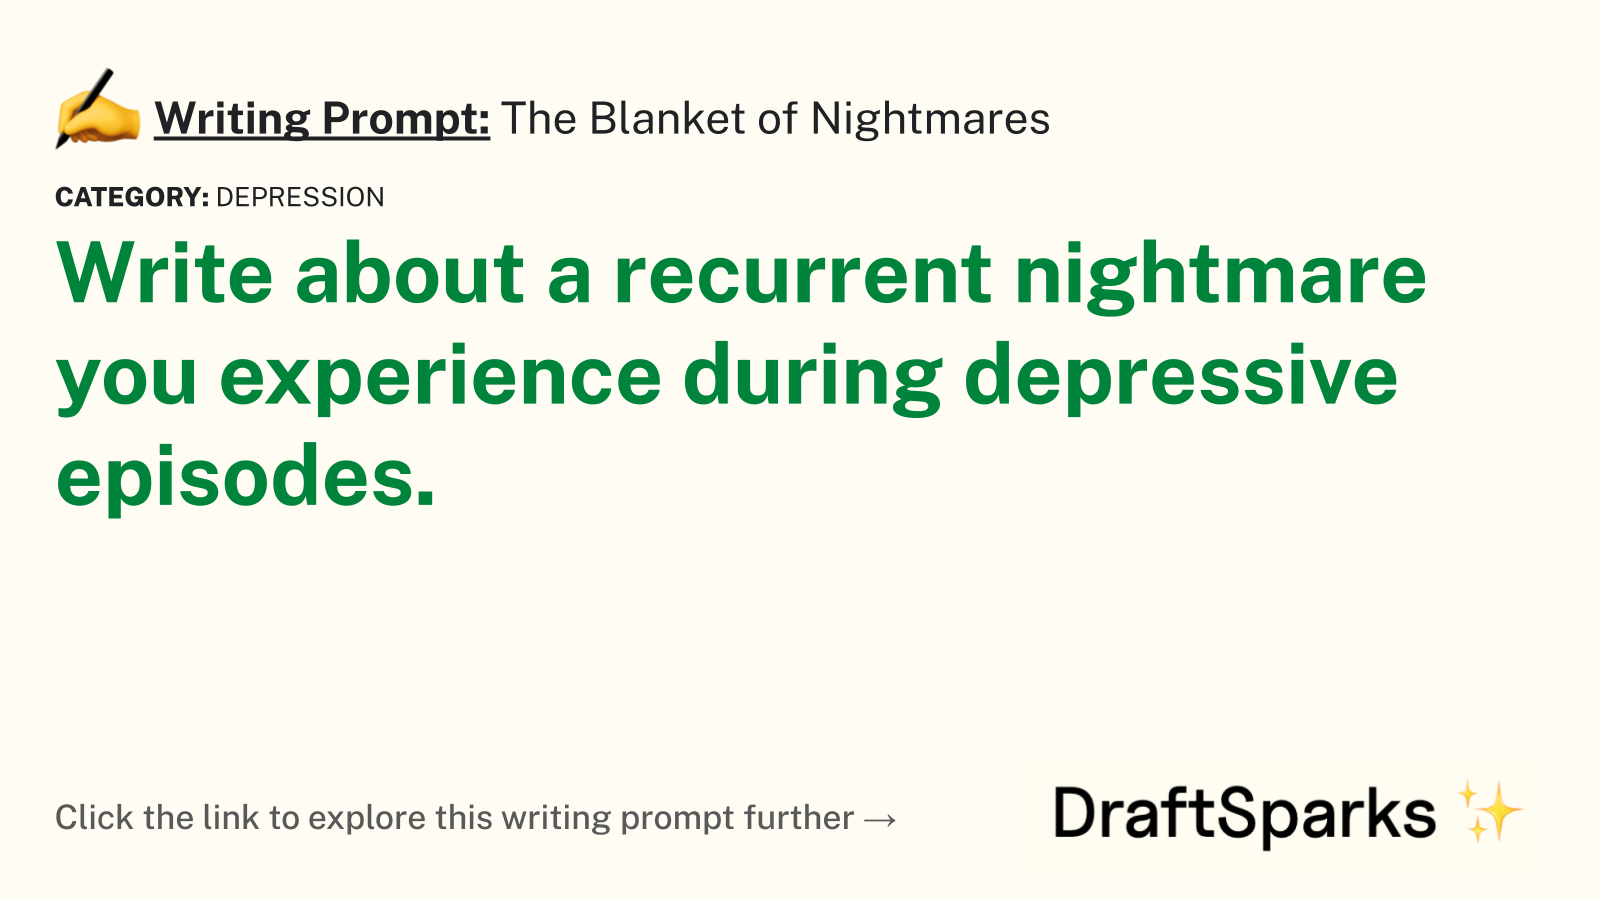 The Blanket of Nightmares